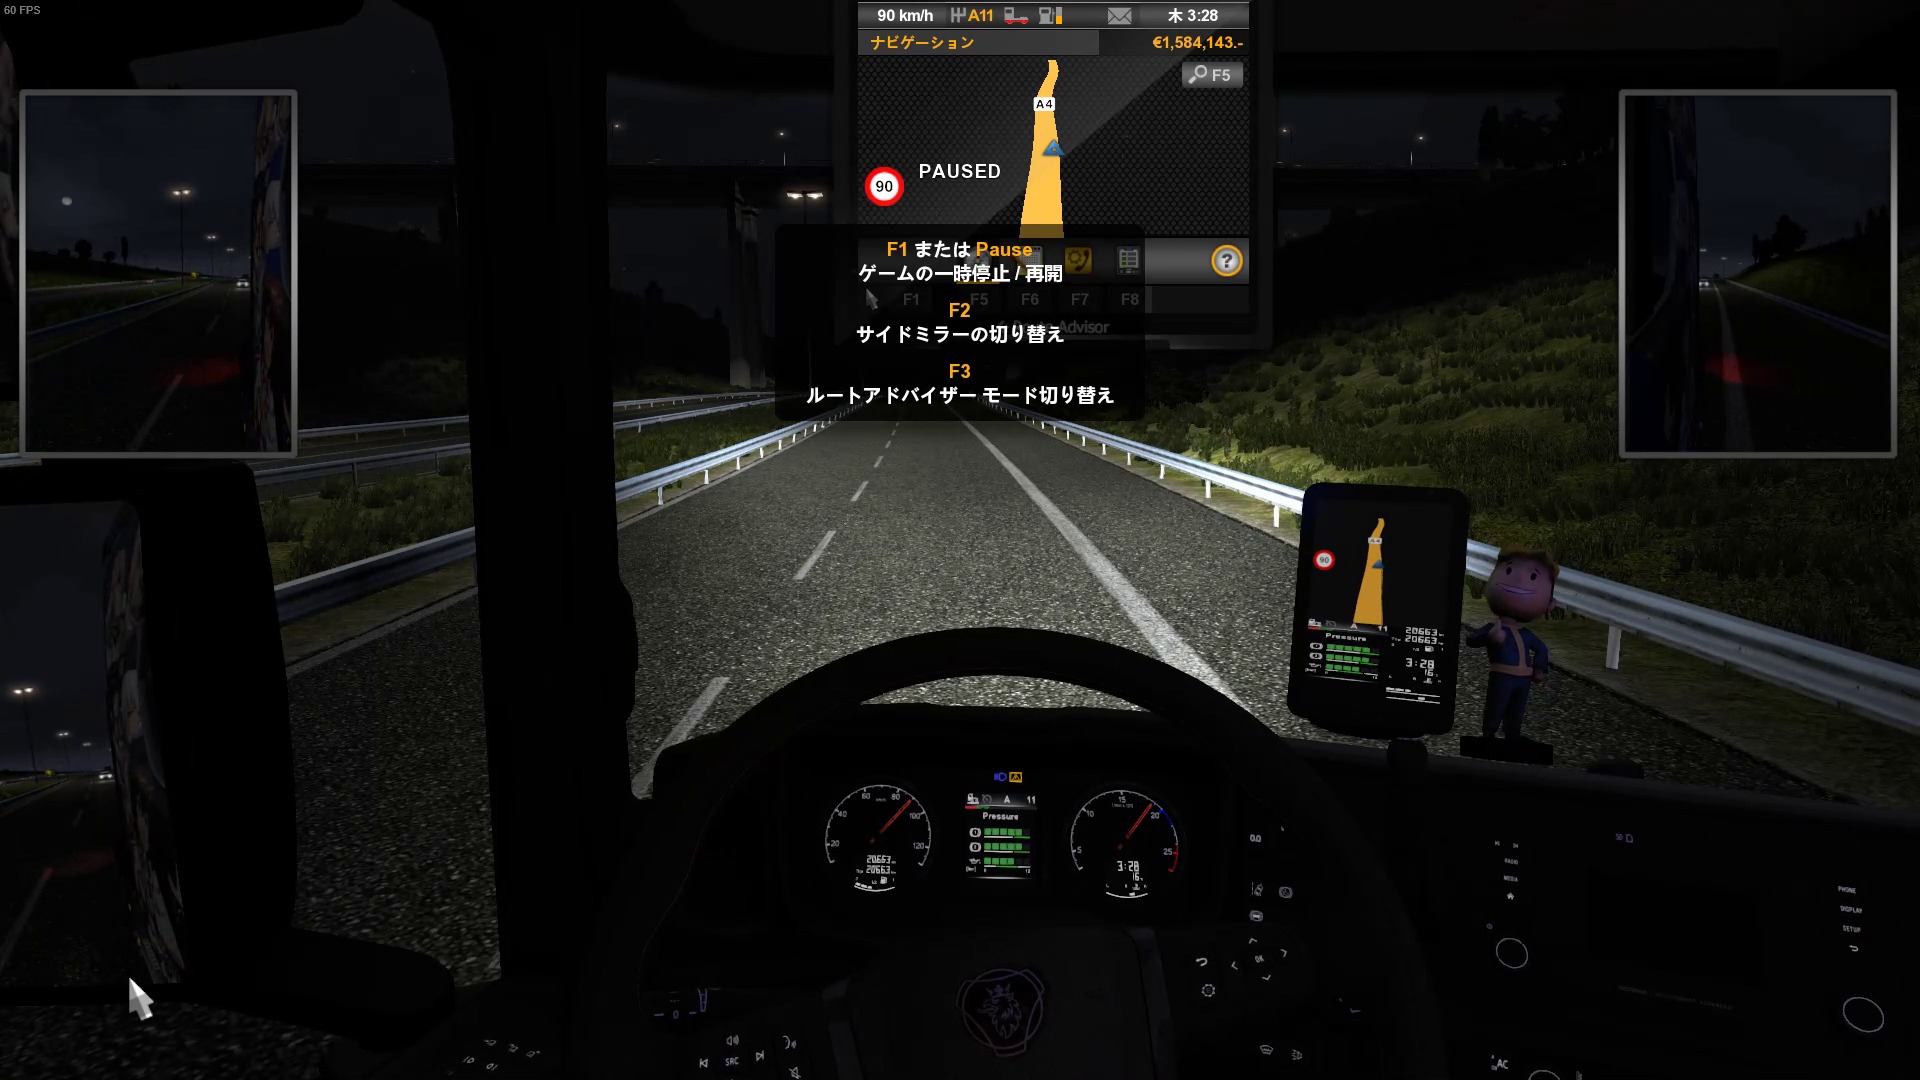 Tobii Eye Tracker 4c レビュー 5 Euro Truck Simulator 2 Ets2 編